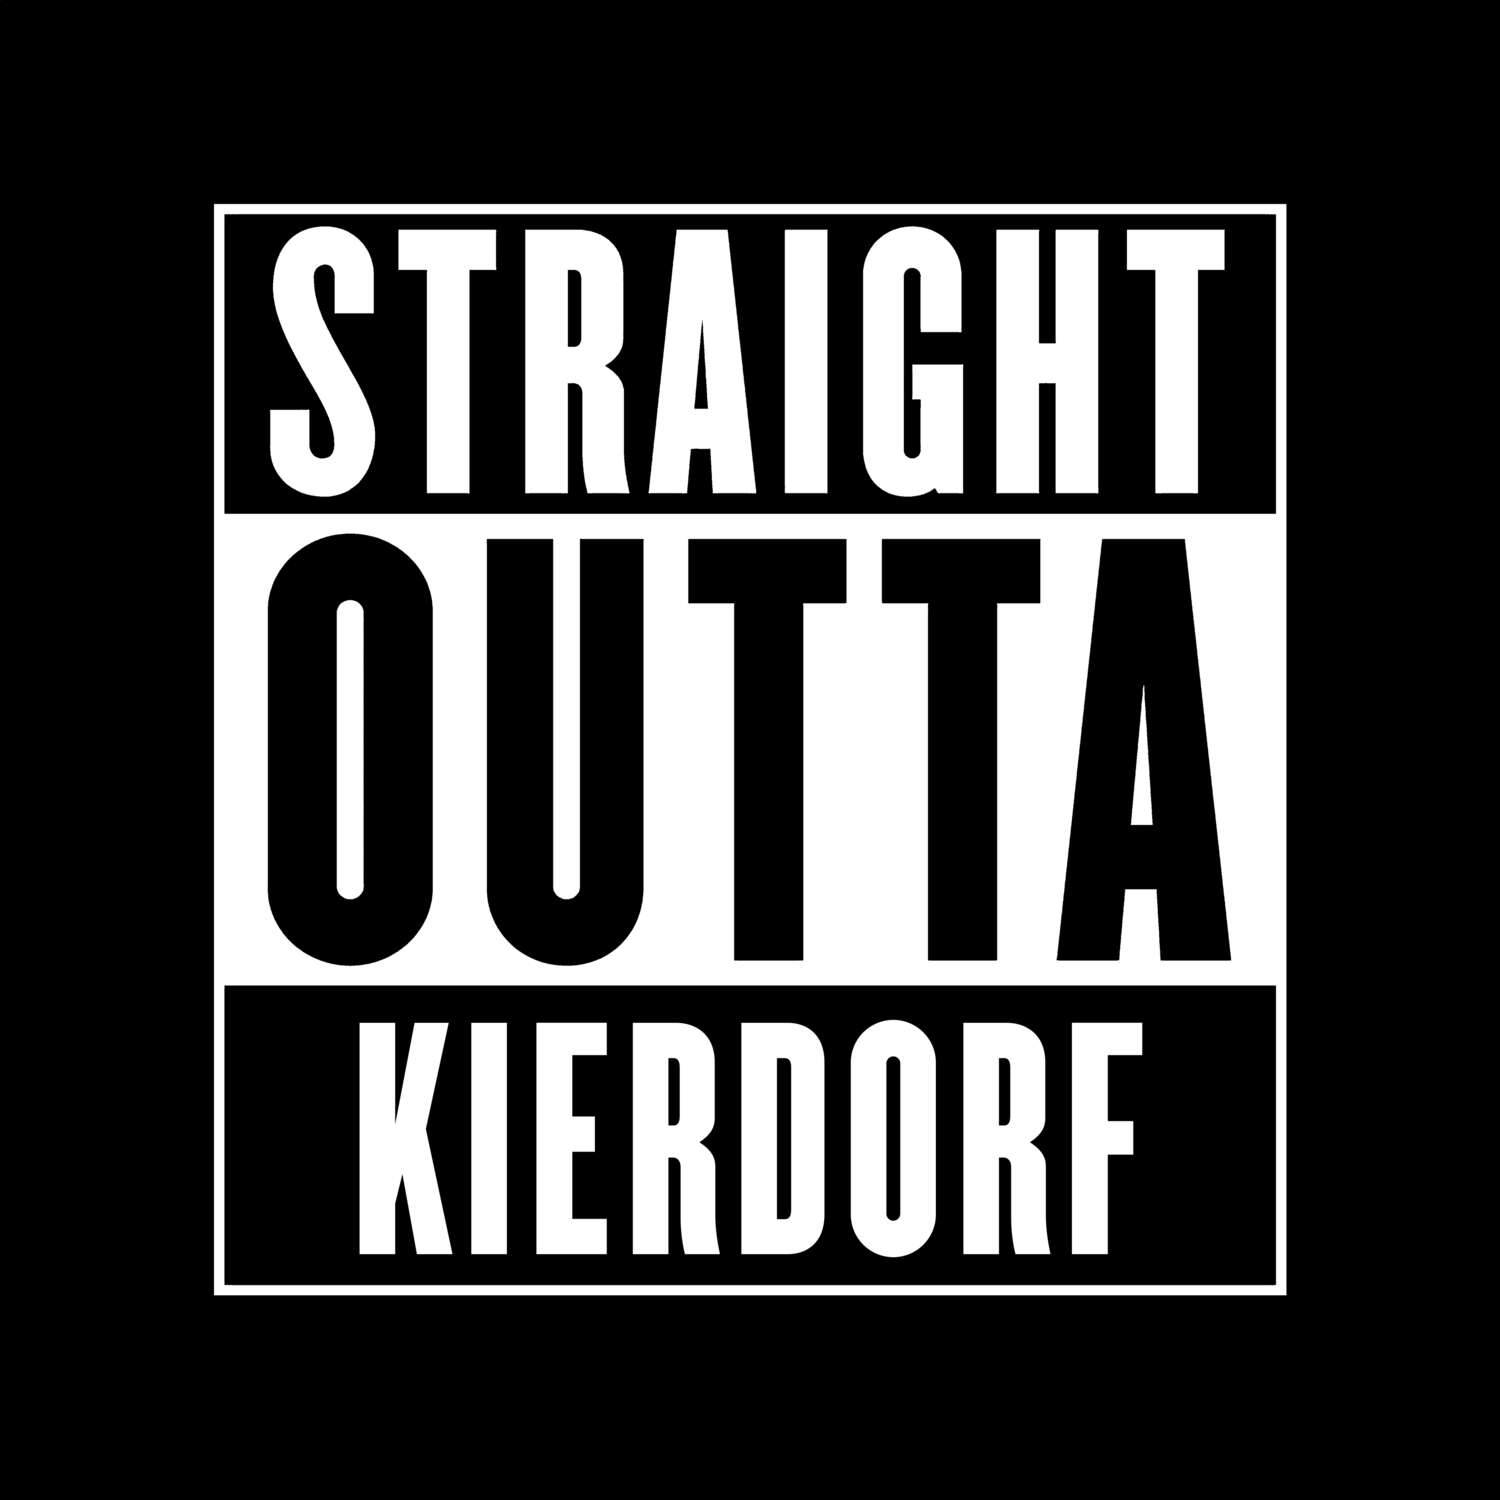 Kierdorf T-Shirt »Straight Outta«